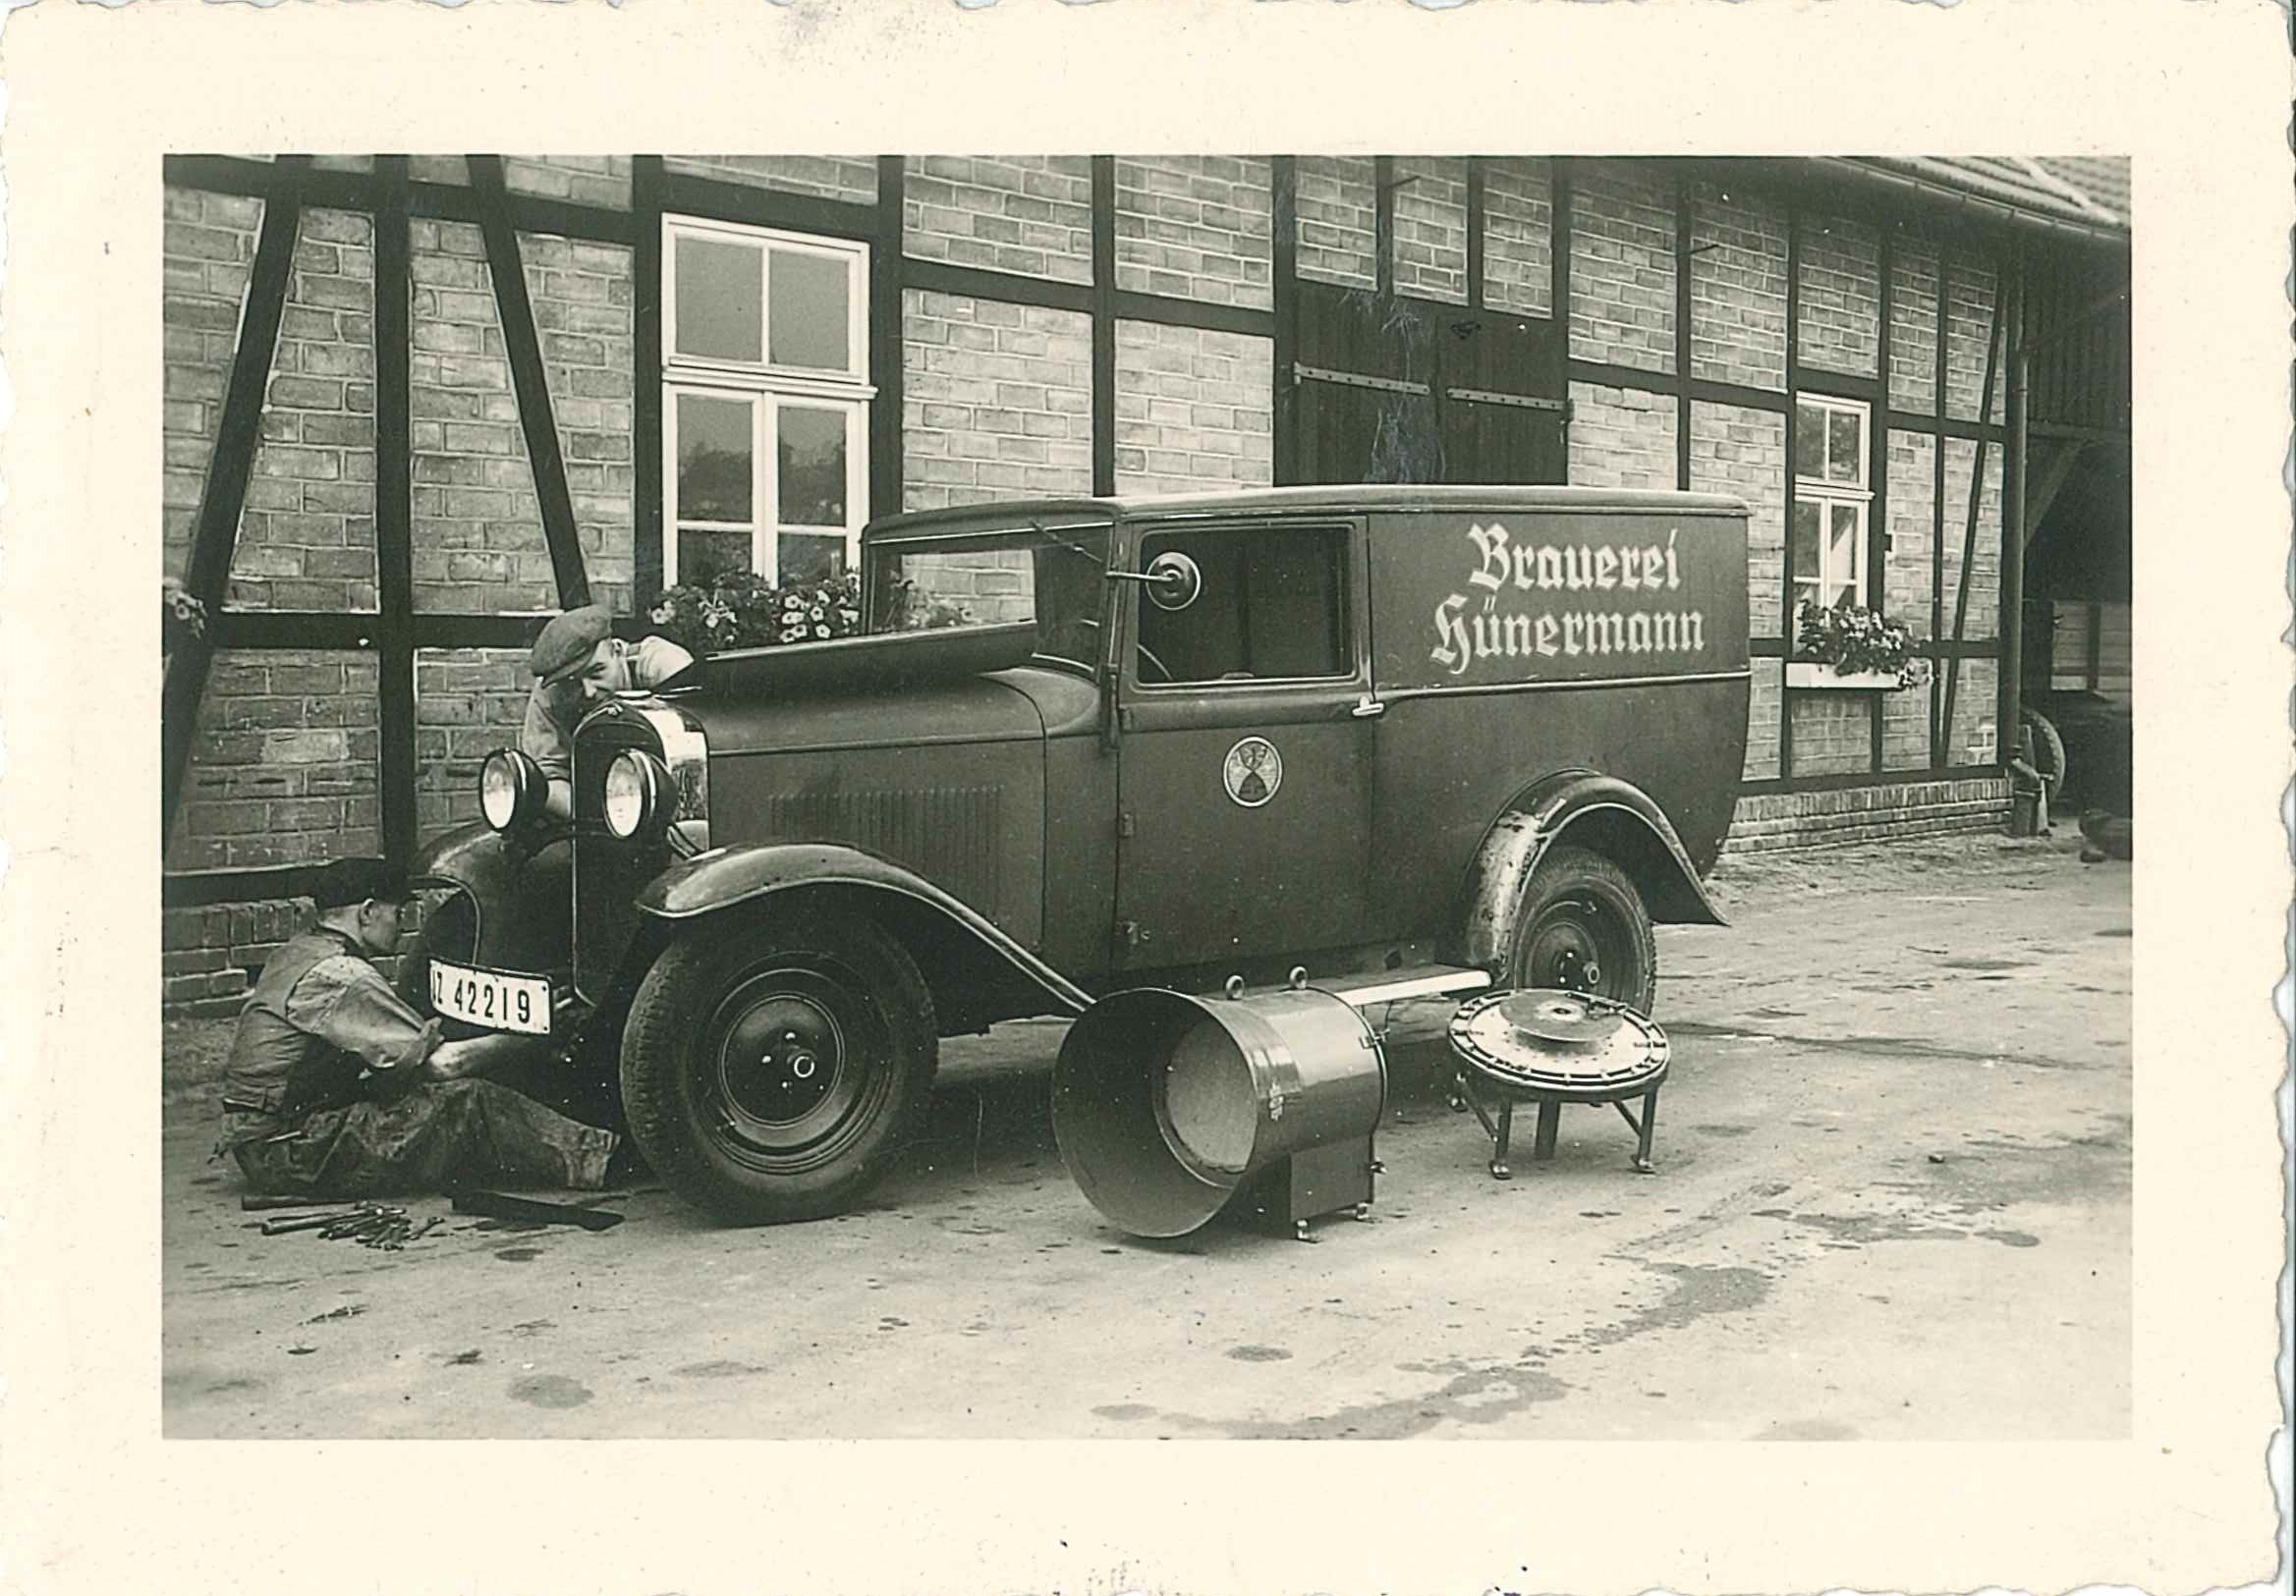 Ehemalige Brauerei Hünermann, Bendorf-Sayn 1930er Jahre (REM CC BY-NC-SA)